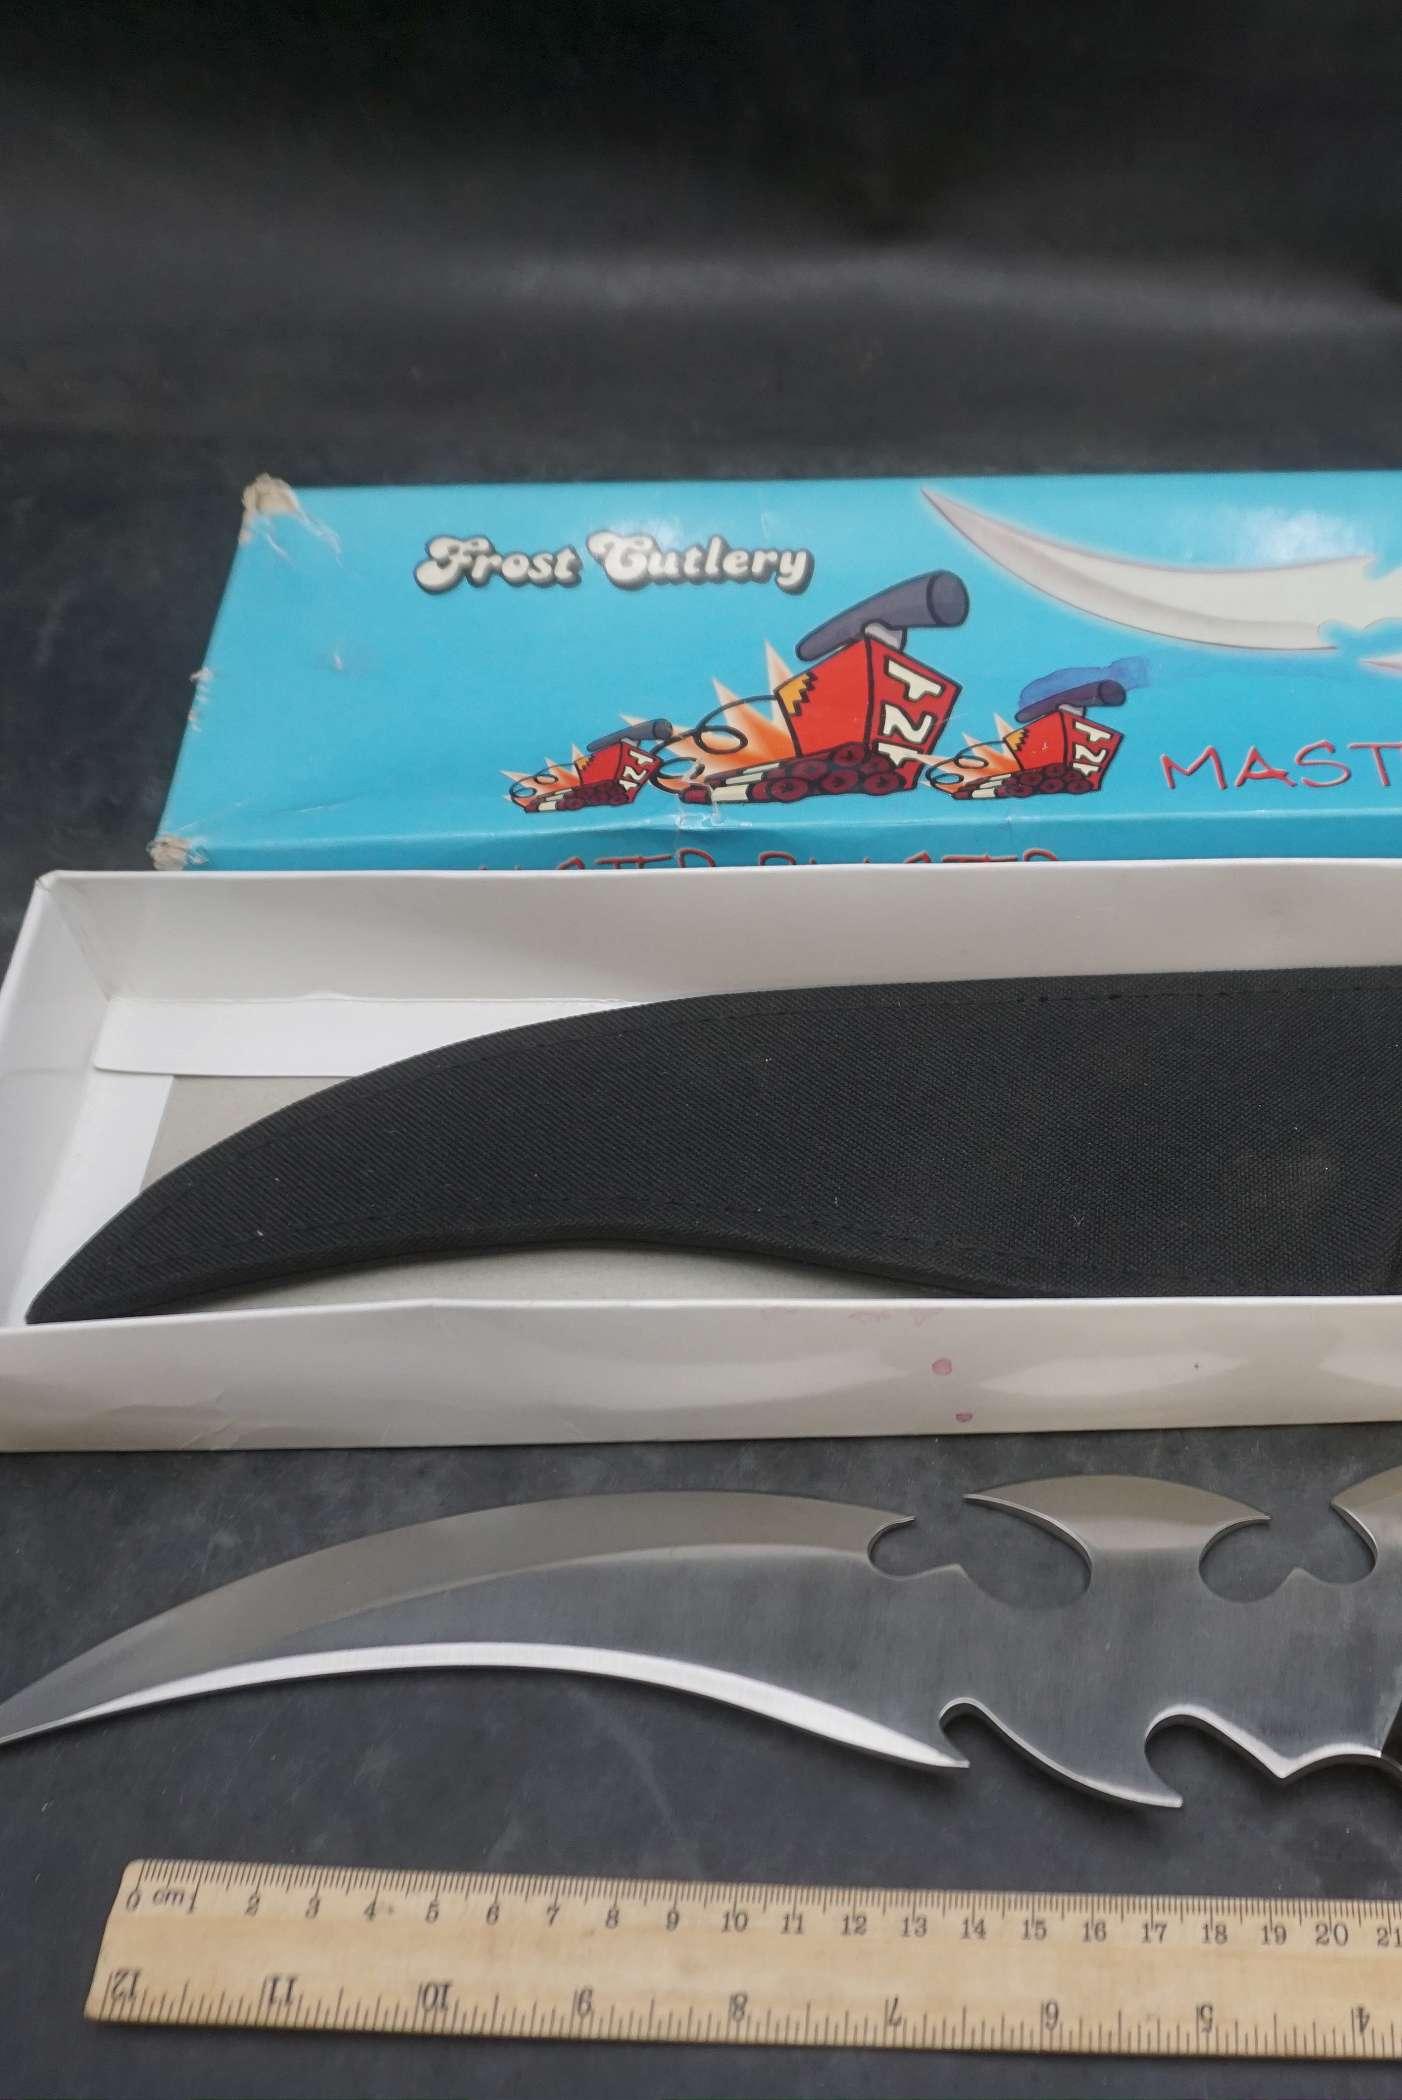 Frost Cutlery Master Blaster Knife w/ Sheath